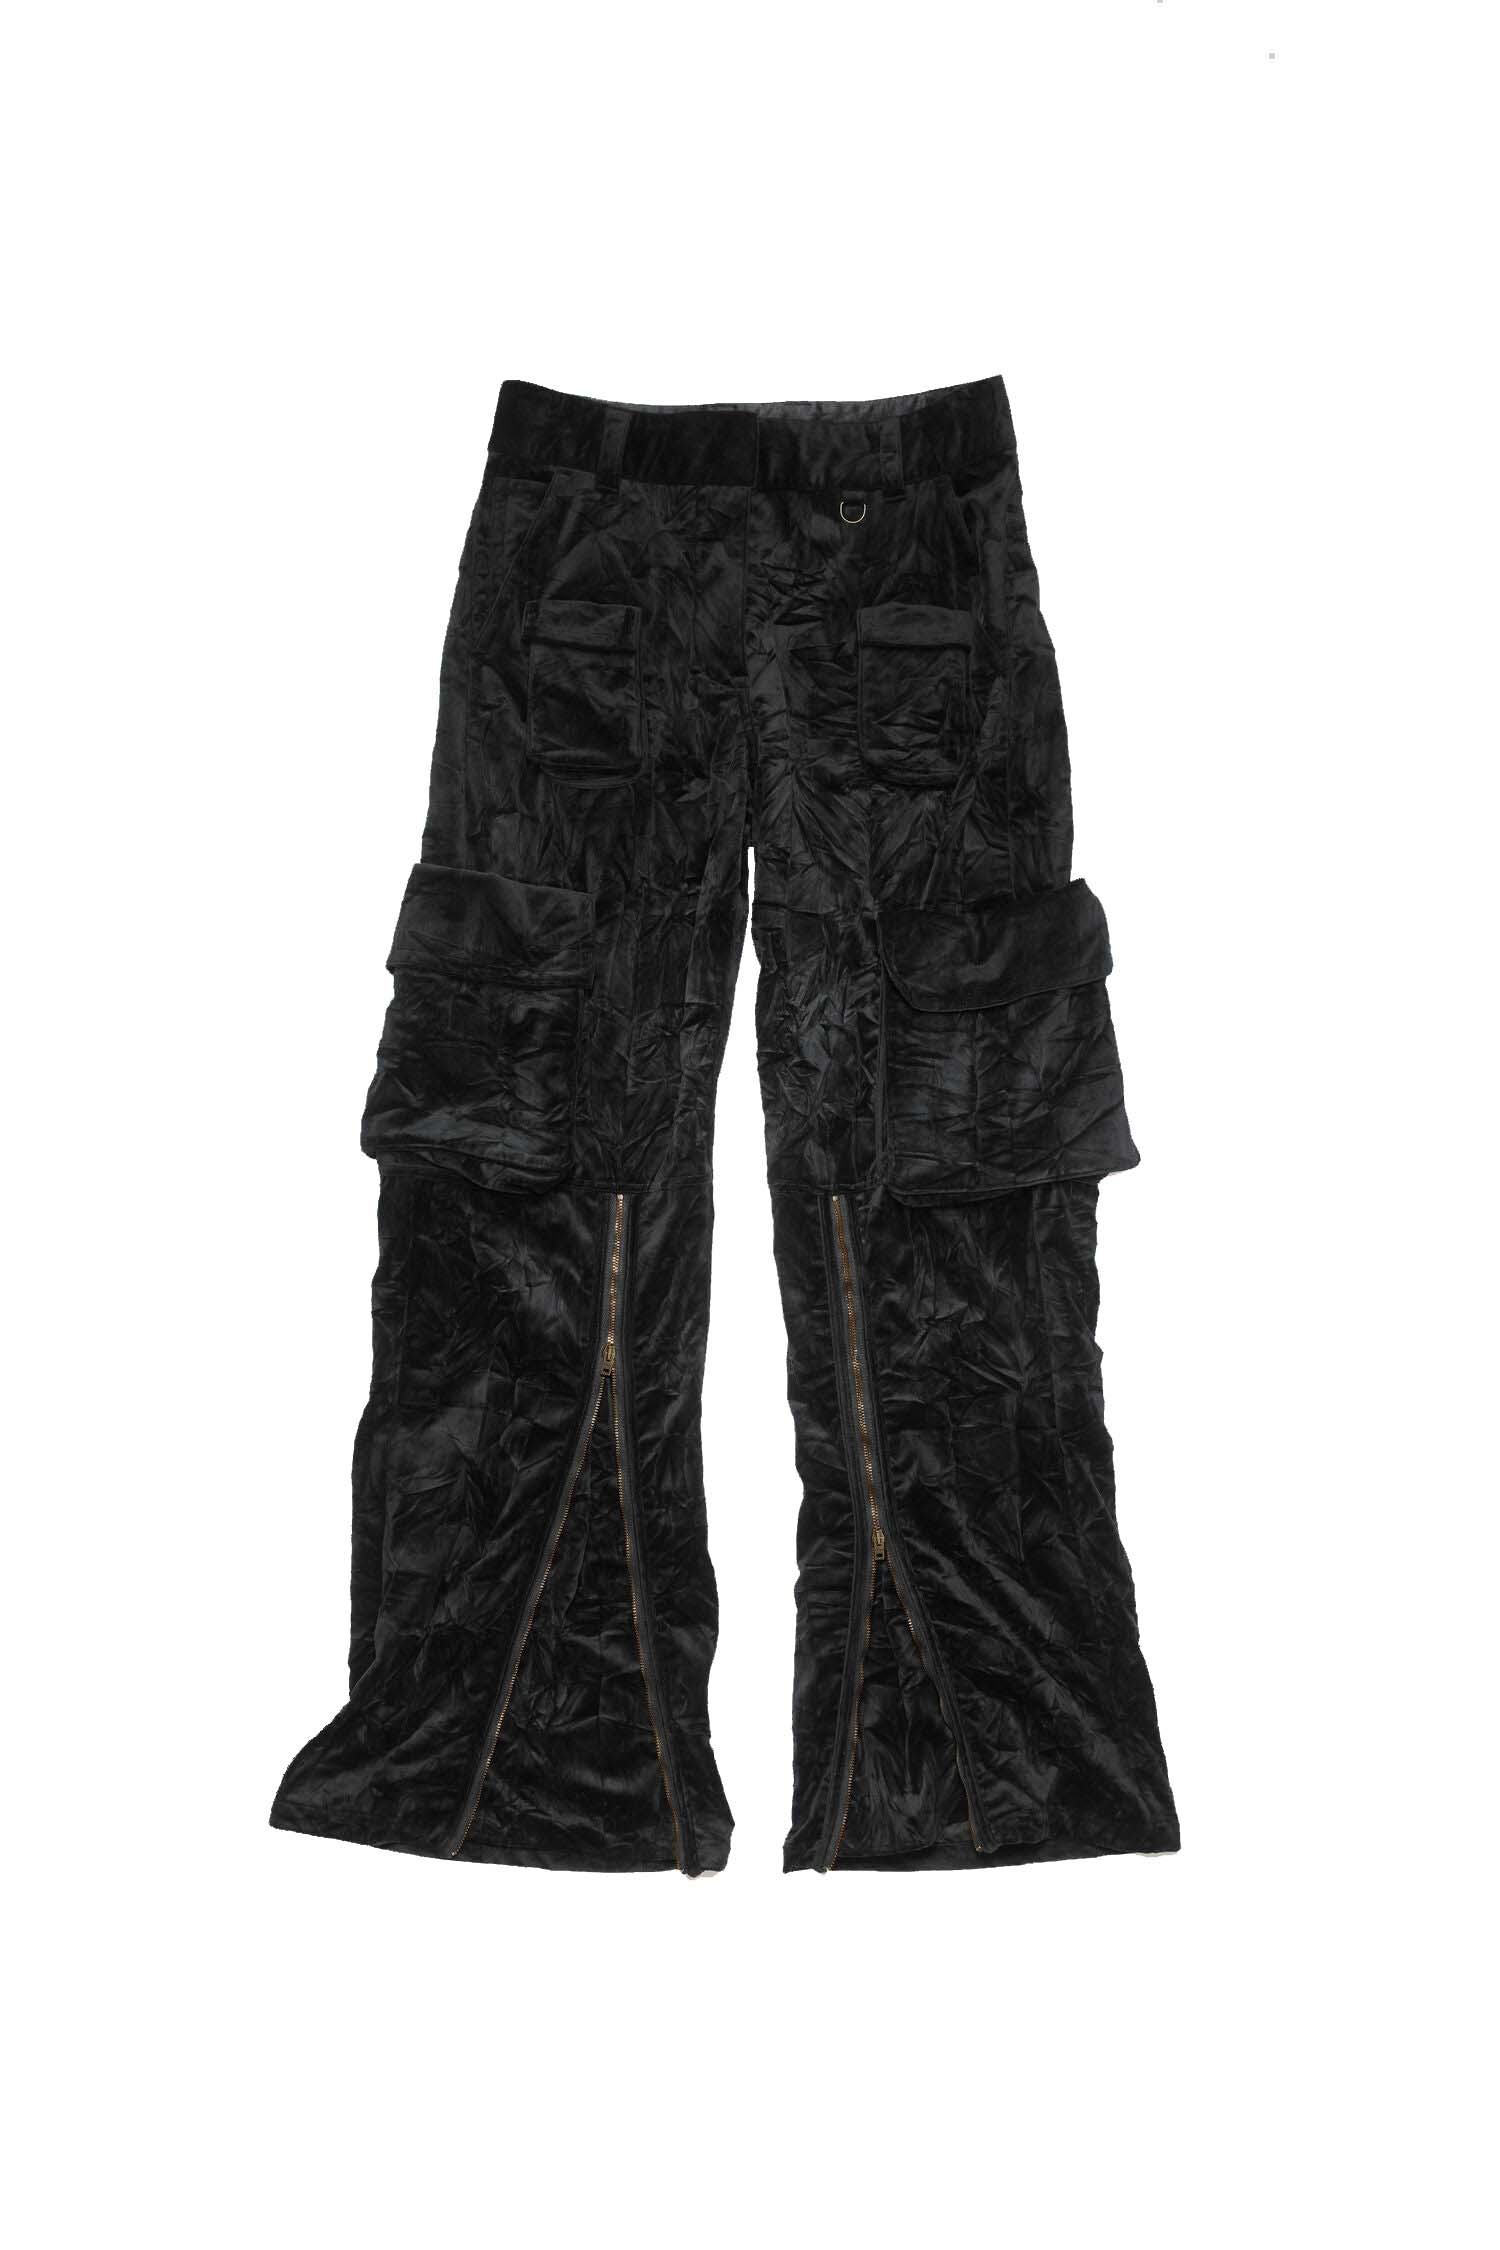 Acne Studios Zipper Cargo Pants Black - US